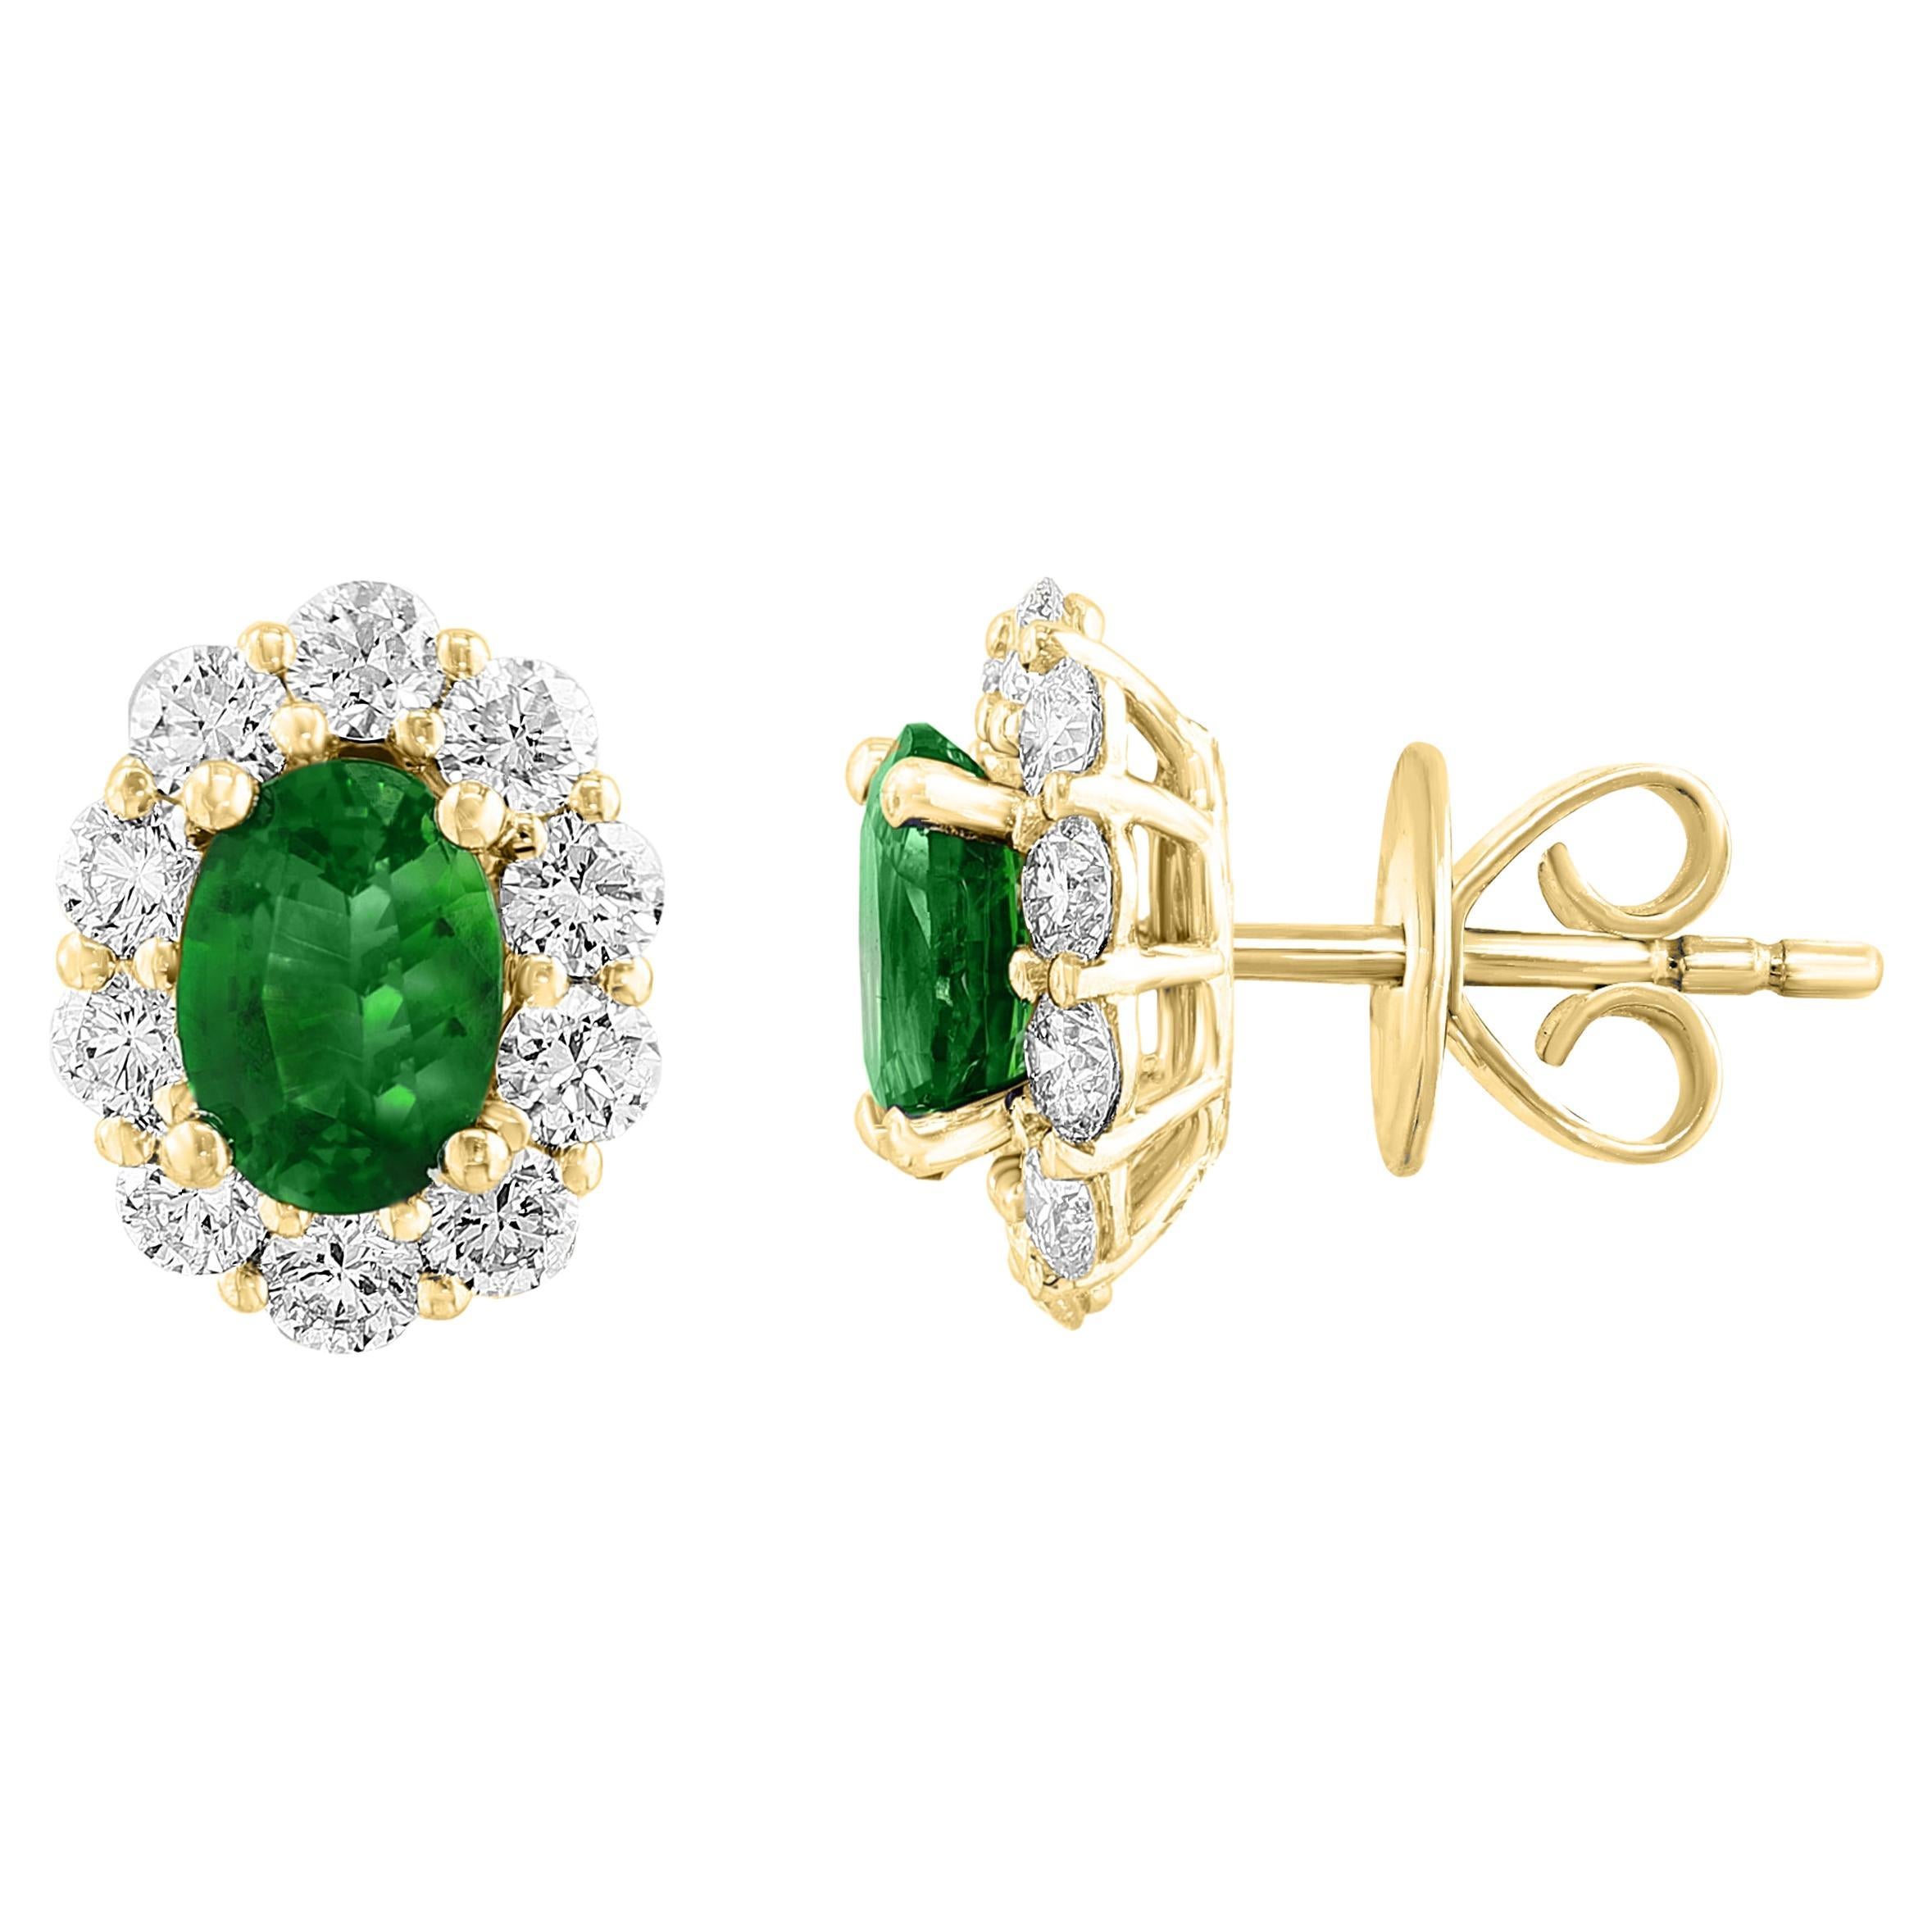 1.28 Carat Oval Cut Emerald and Diamond Stud Earrings in 18K Yellow Gold